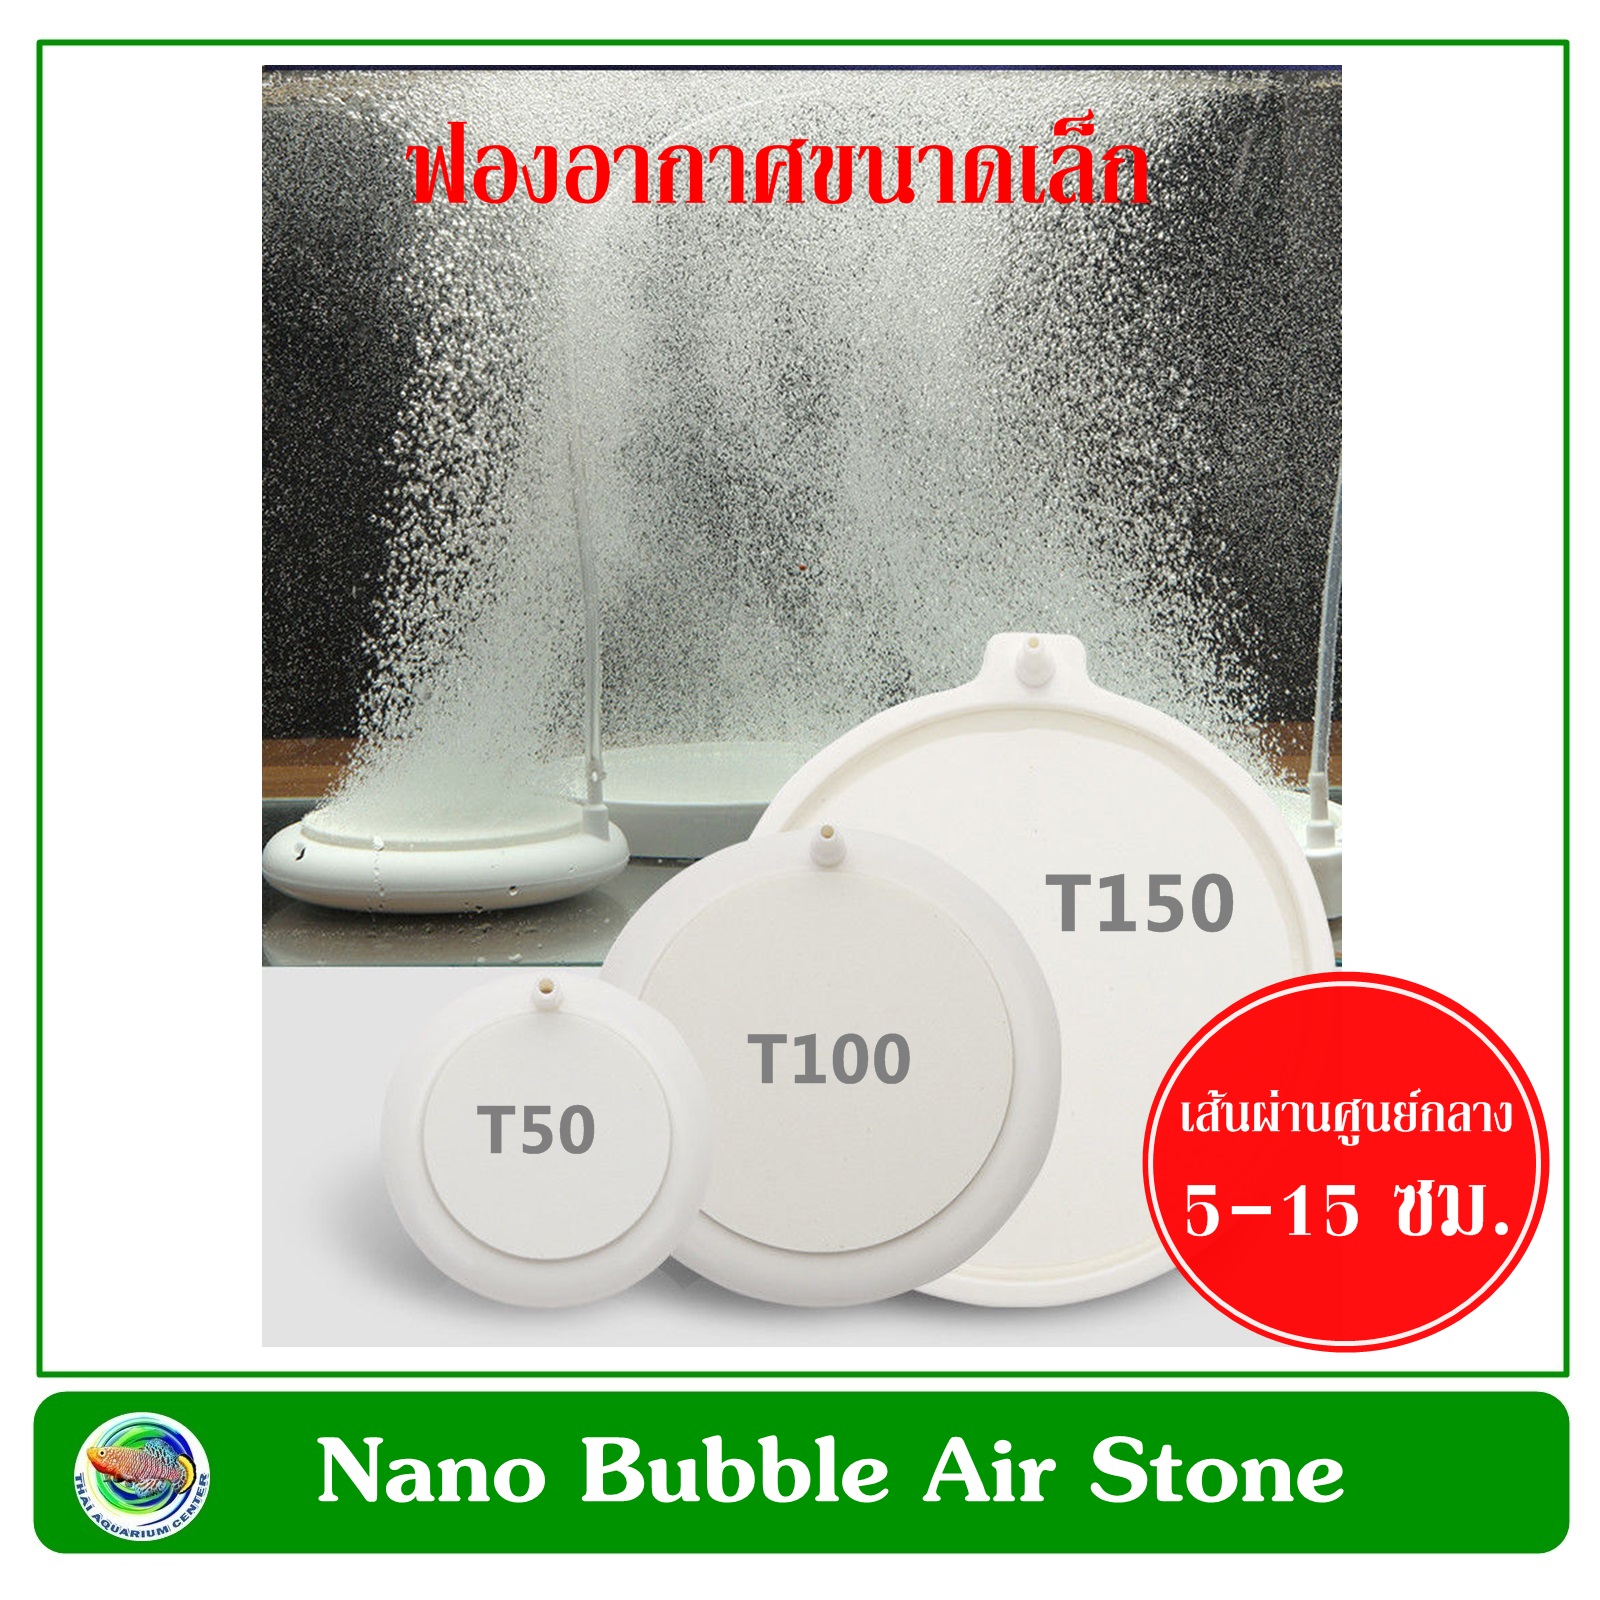 Nano Air Stone HT-150 หัวทรายจาน สีขาว ฟองอากาศขนาดเล็ก ขนาด 15 ซม.